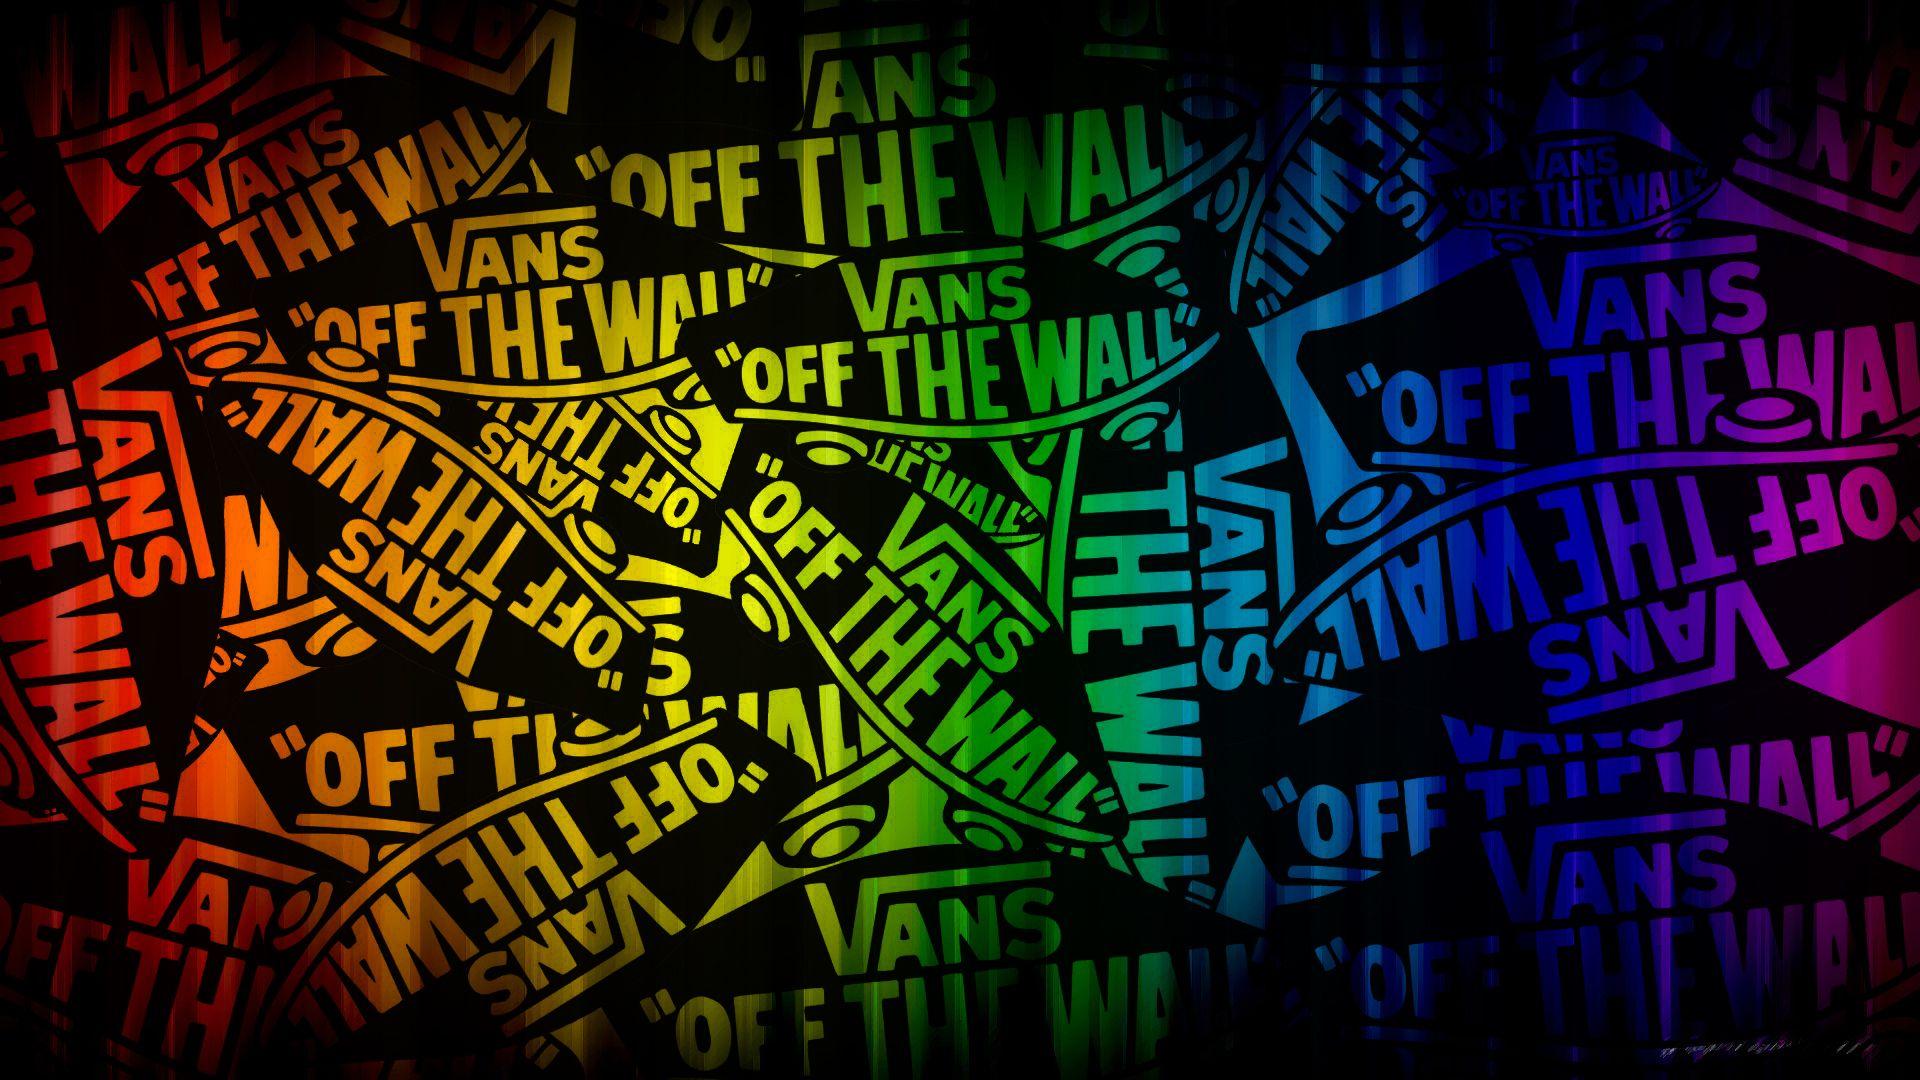 Vans Skateboard Wallpaper Photo. Vans off the wall